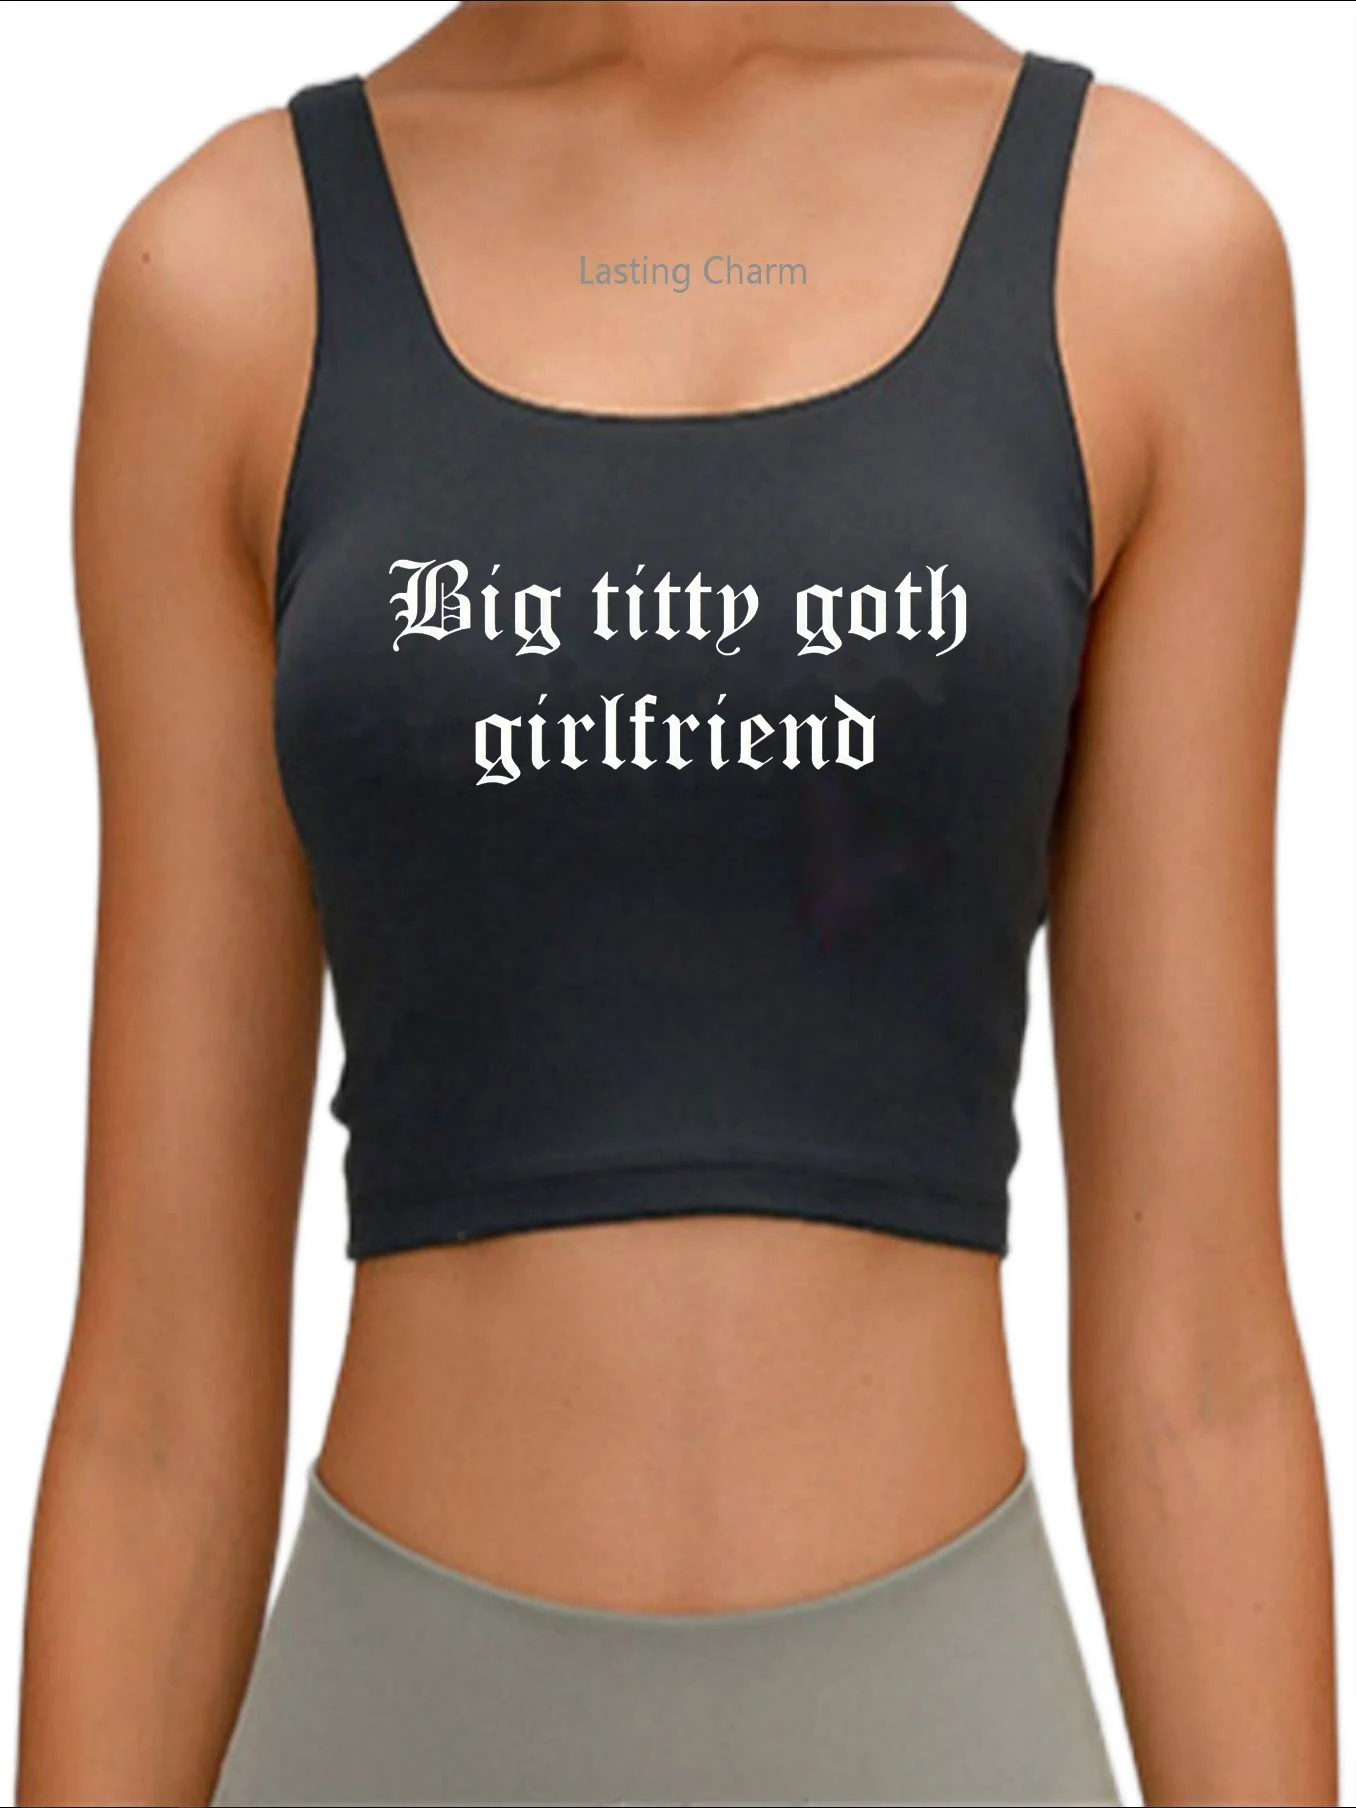 Big titty goth girlfriend Women's Crop Top women's Slim fit sport tank top